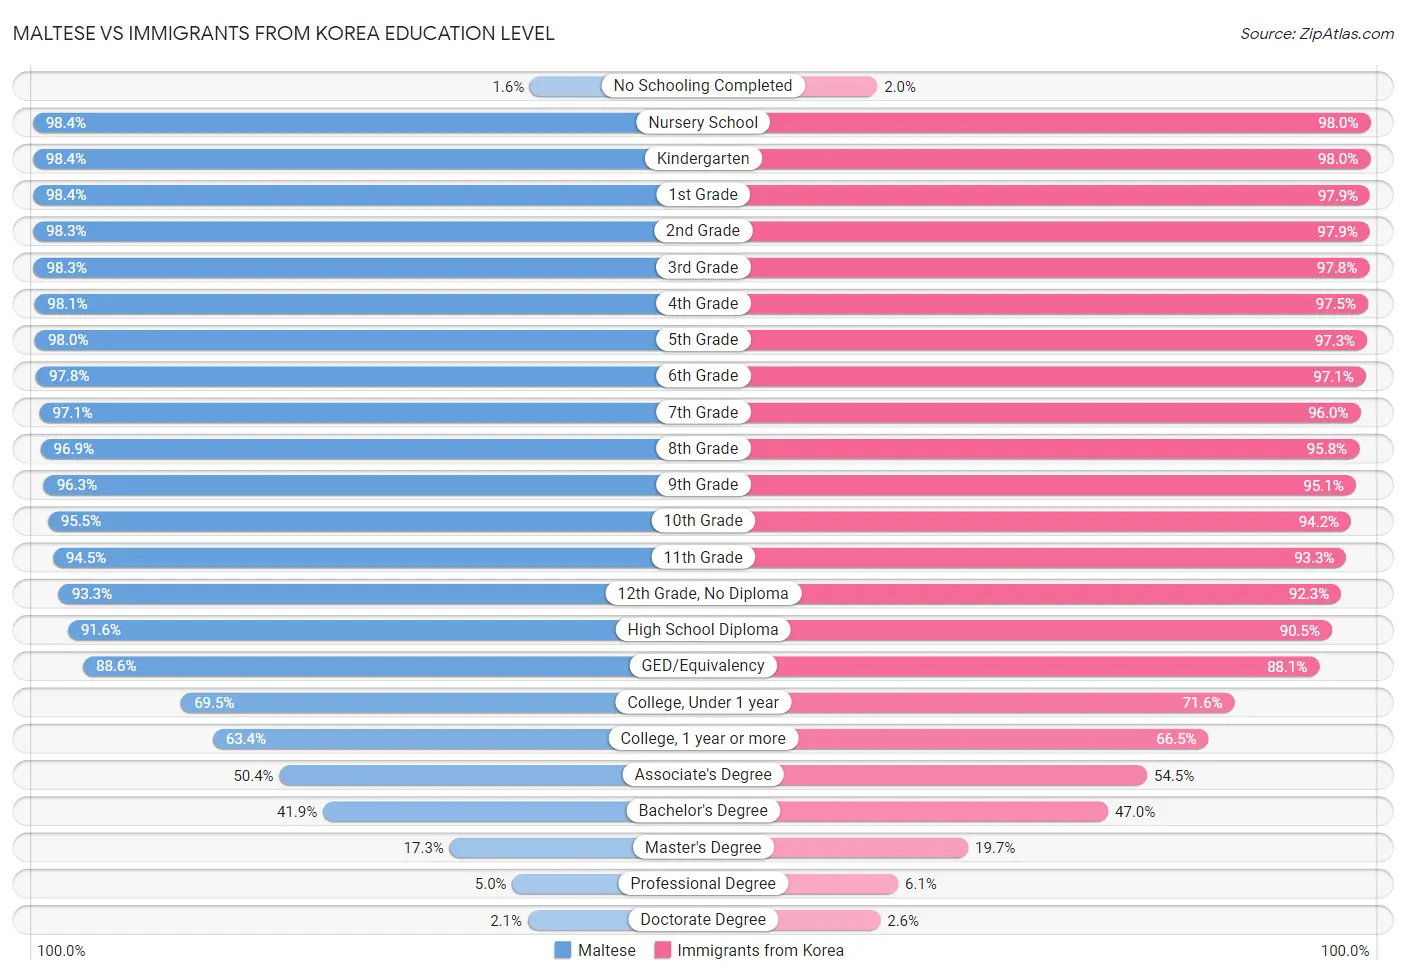 Maltese vs Immigrants from Korea Education Level